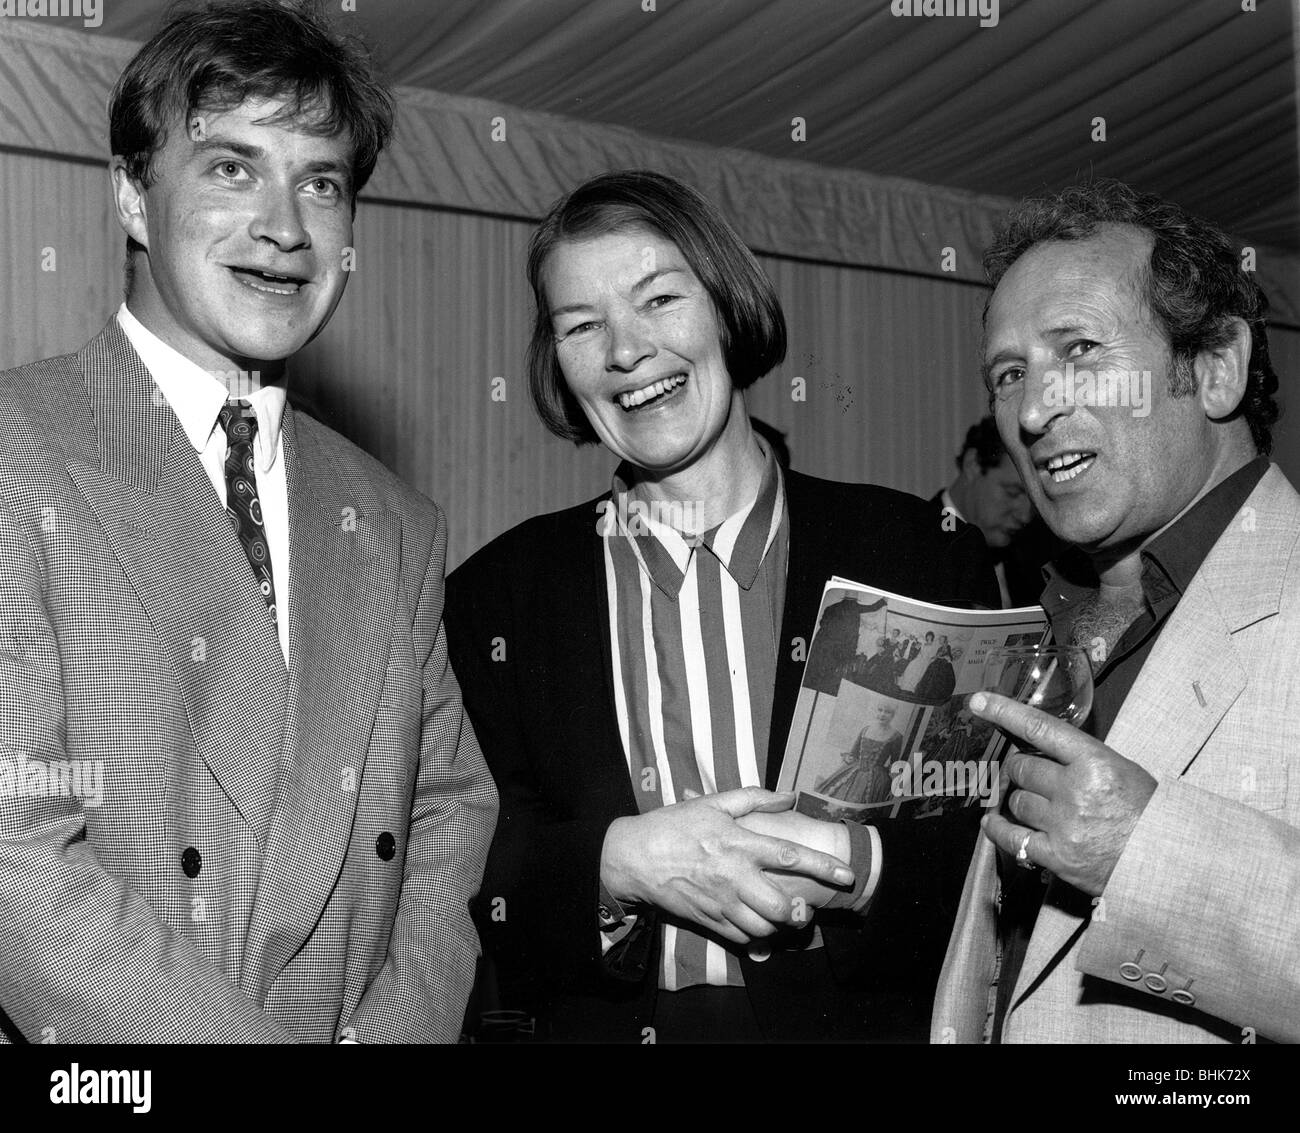 Glenda Jackson (1936- ), British politician and actress, with Harry Enfield, British comedian, 1991. Artist: Sidney Harris Stock Photo